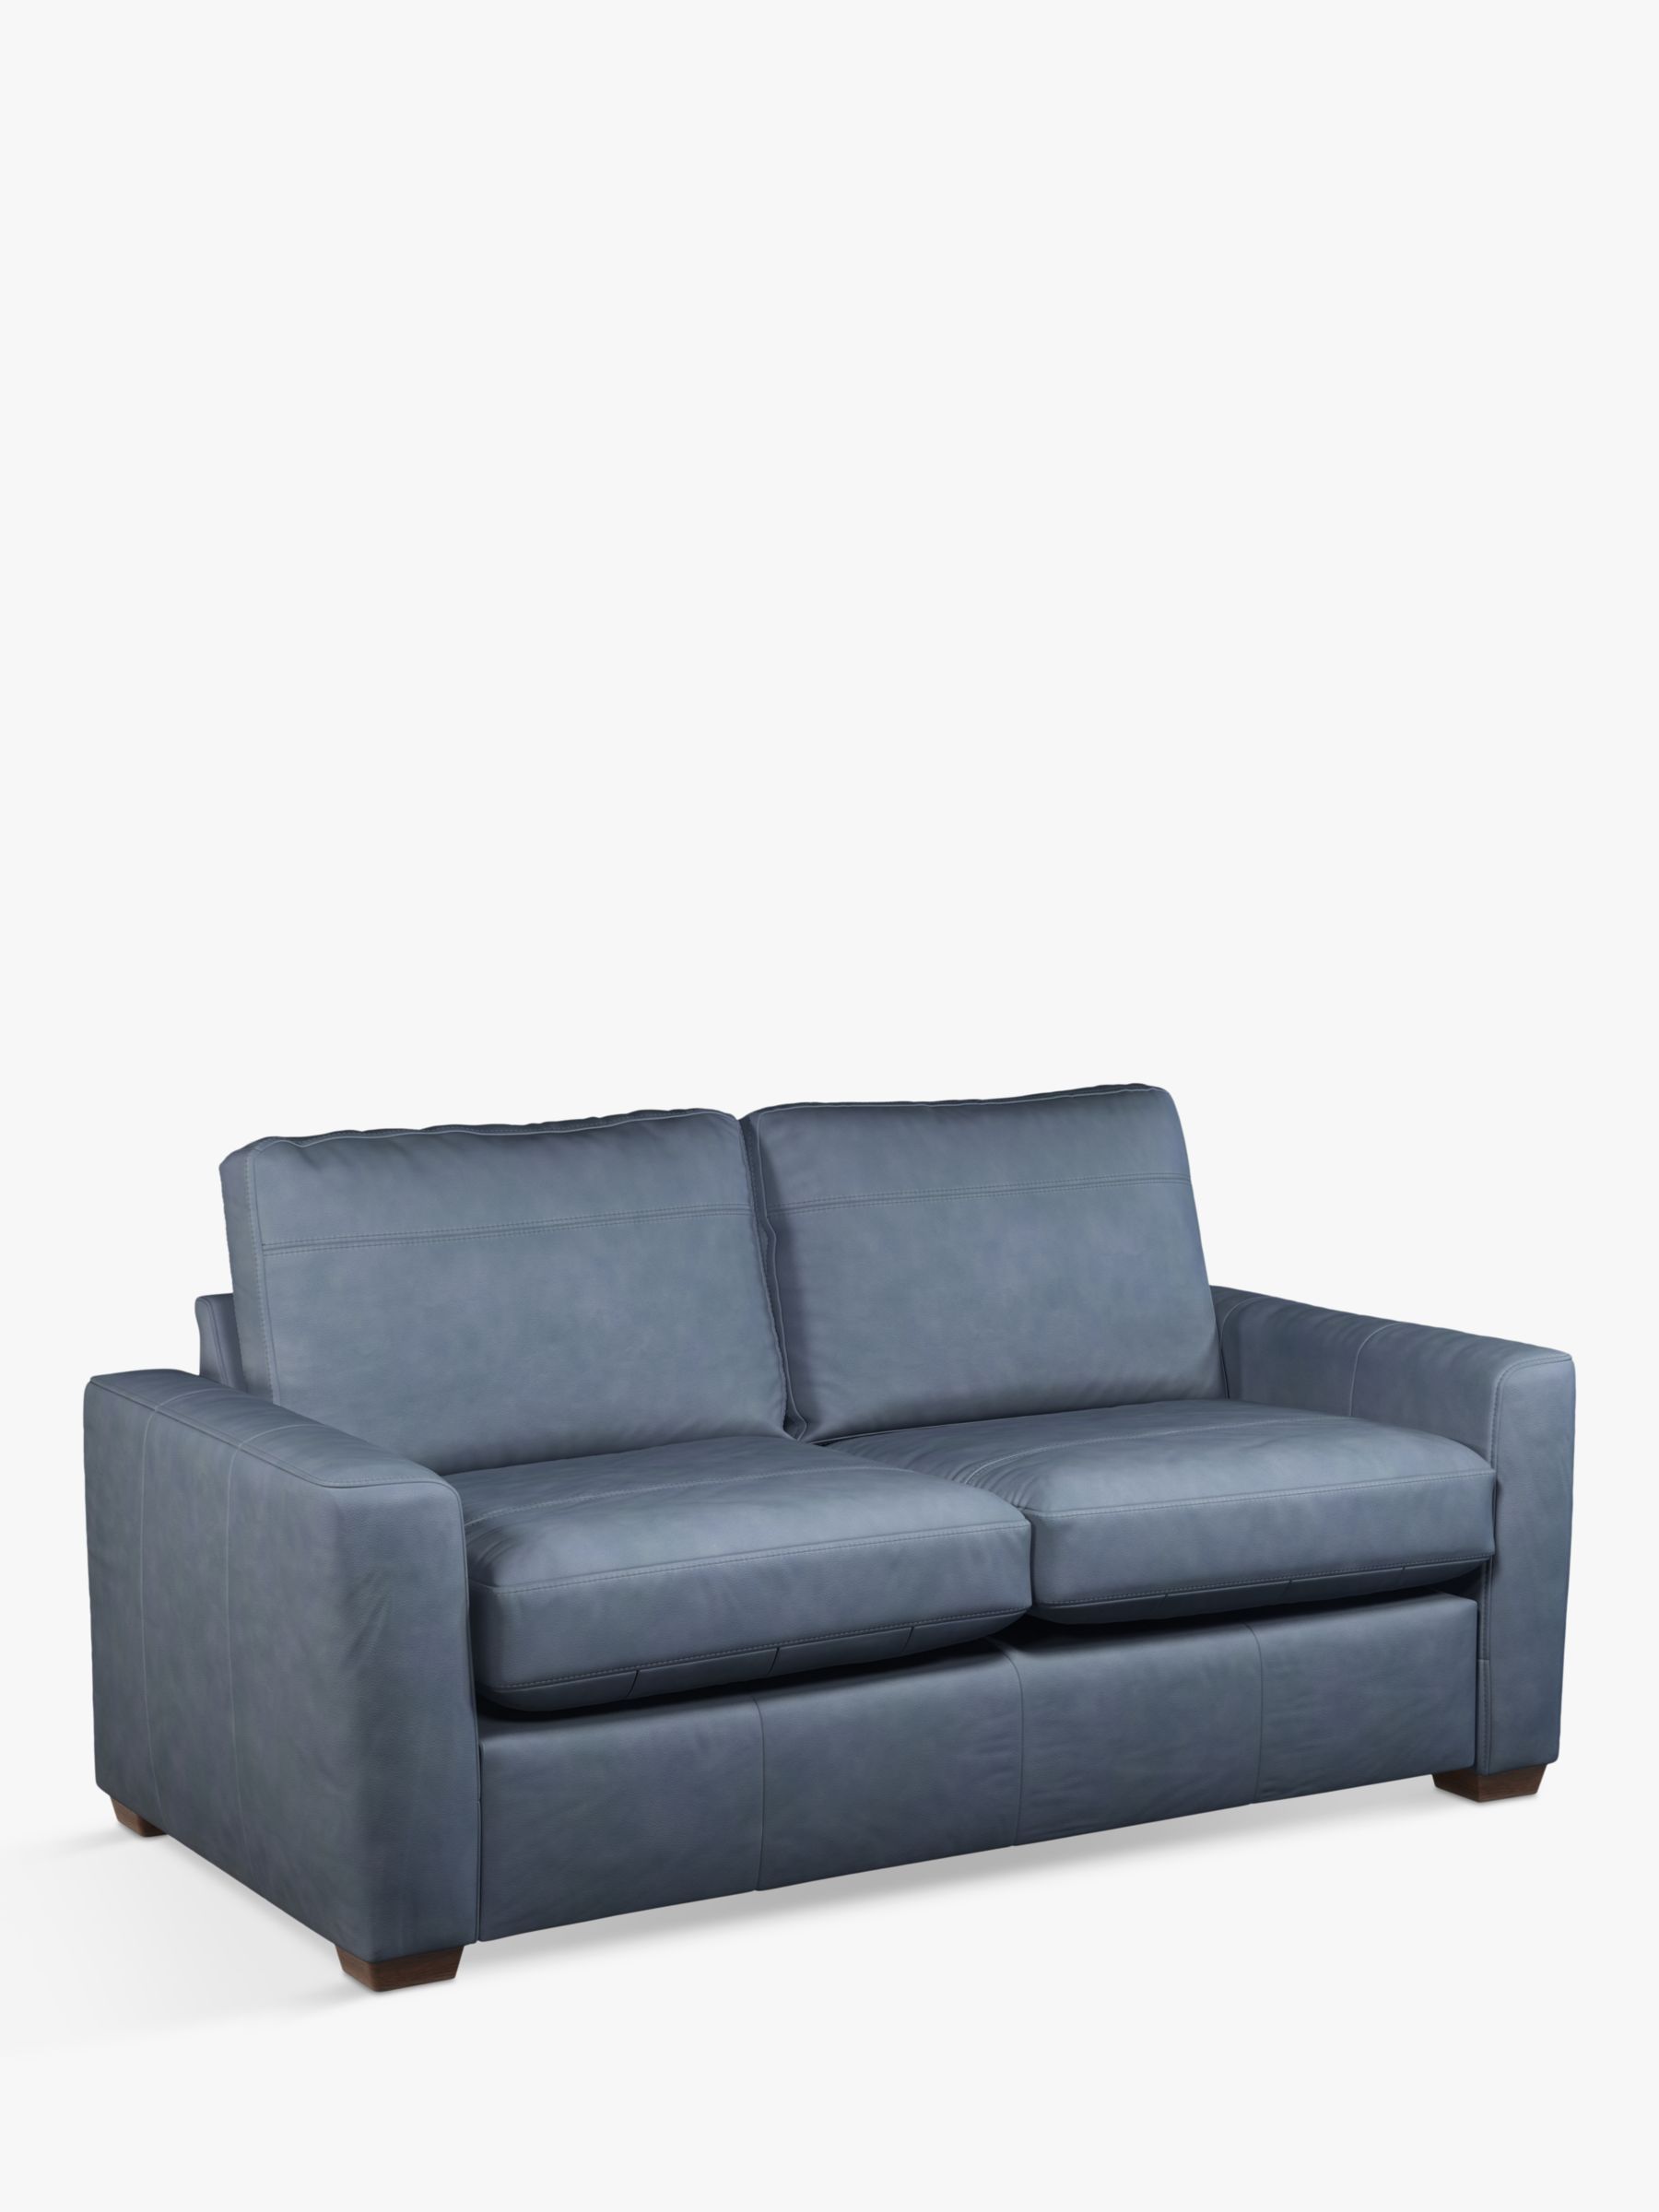 John Lewis Oliver Medium 2 Seater Leather Sofa, Dark Leg